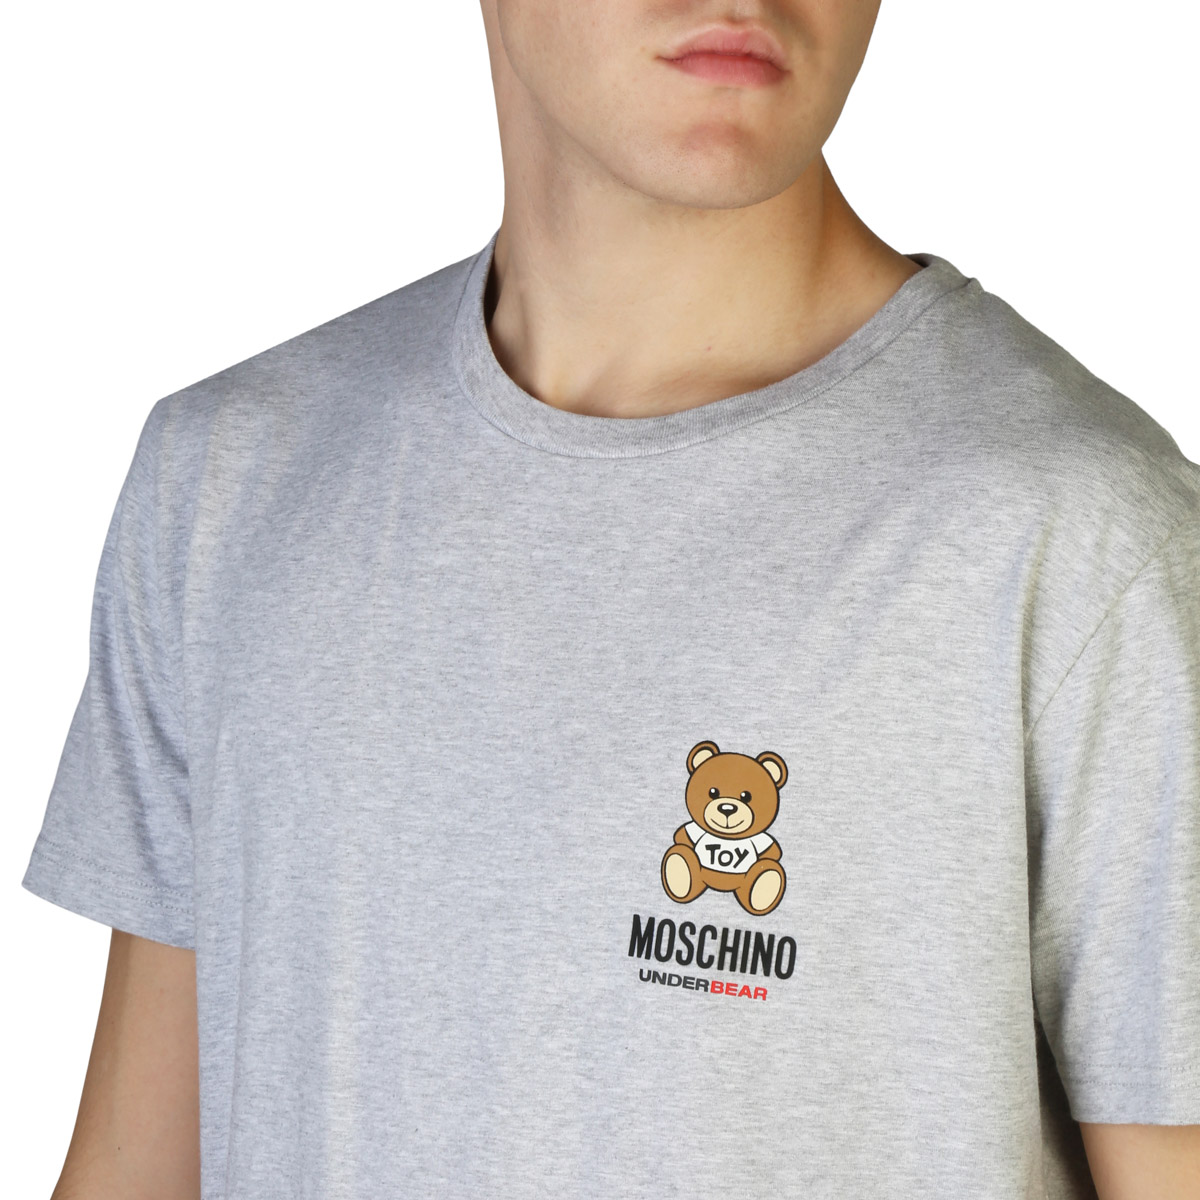 T-shirt_Moschino_Homme-130202-1004875615